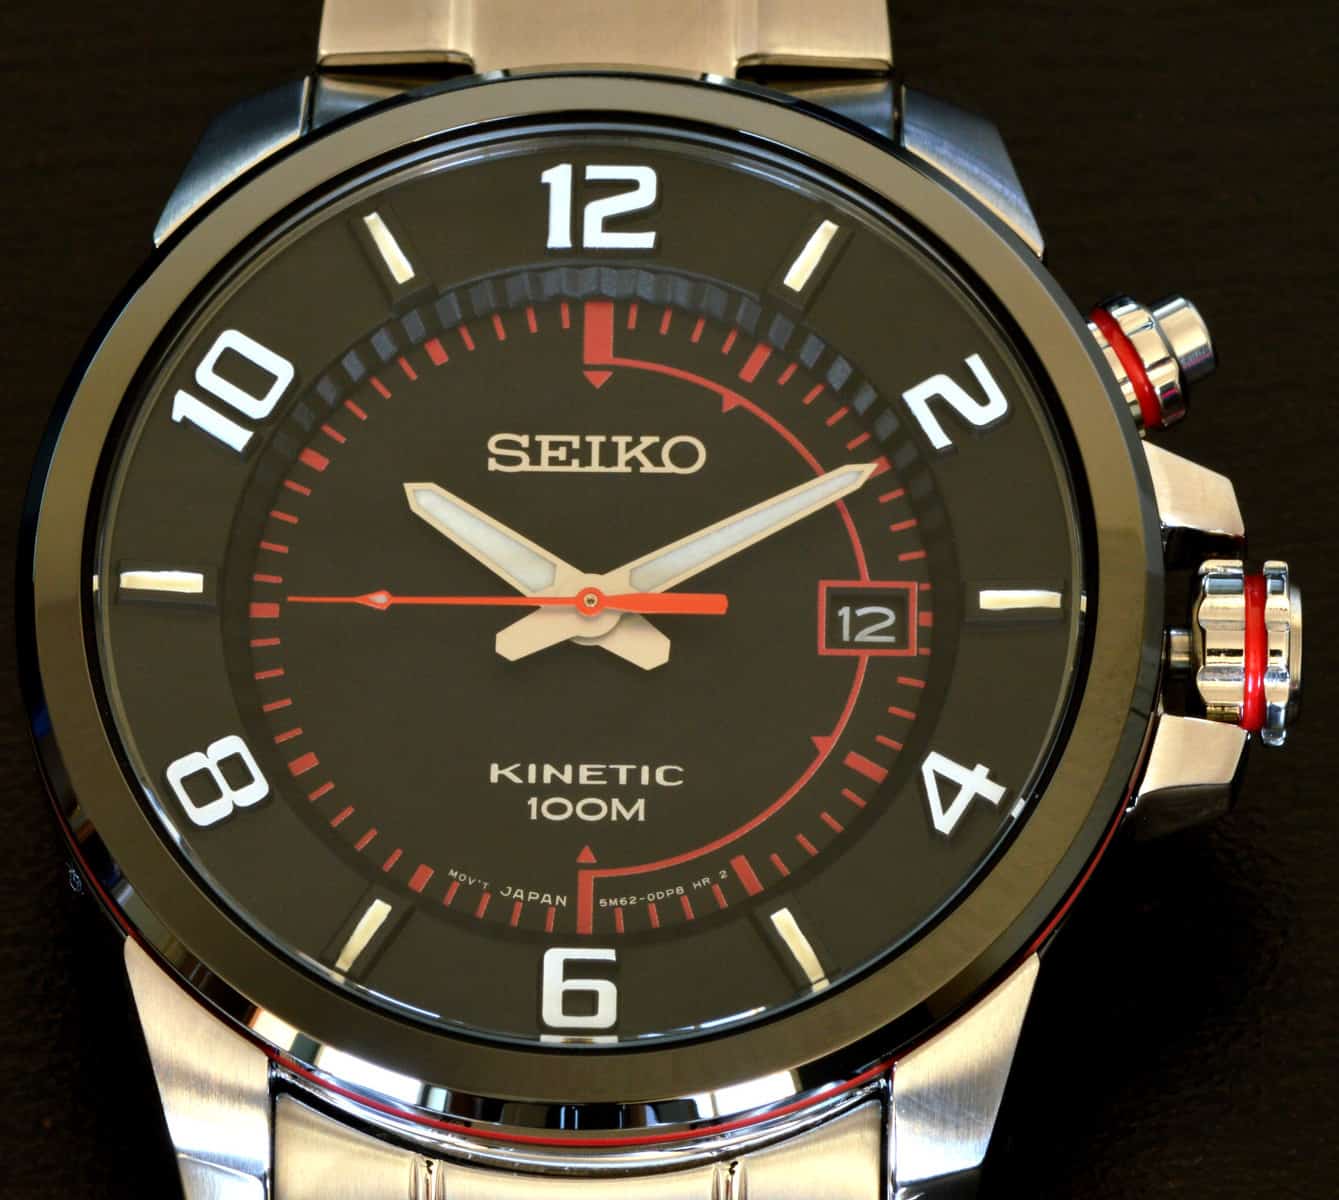 Seiko Kinetic SKA553 Review